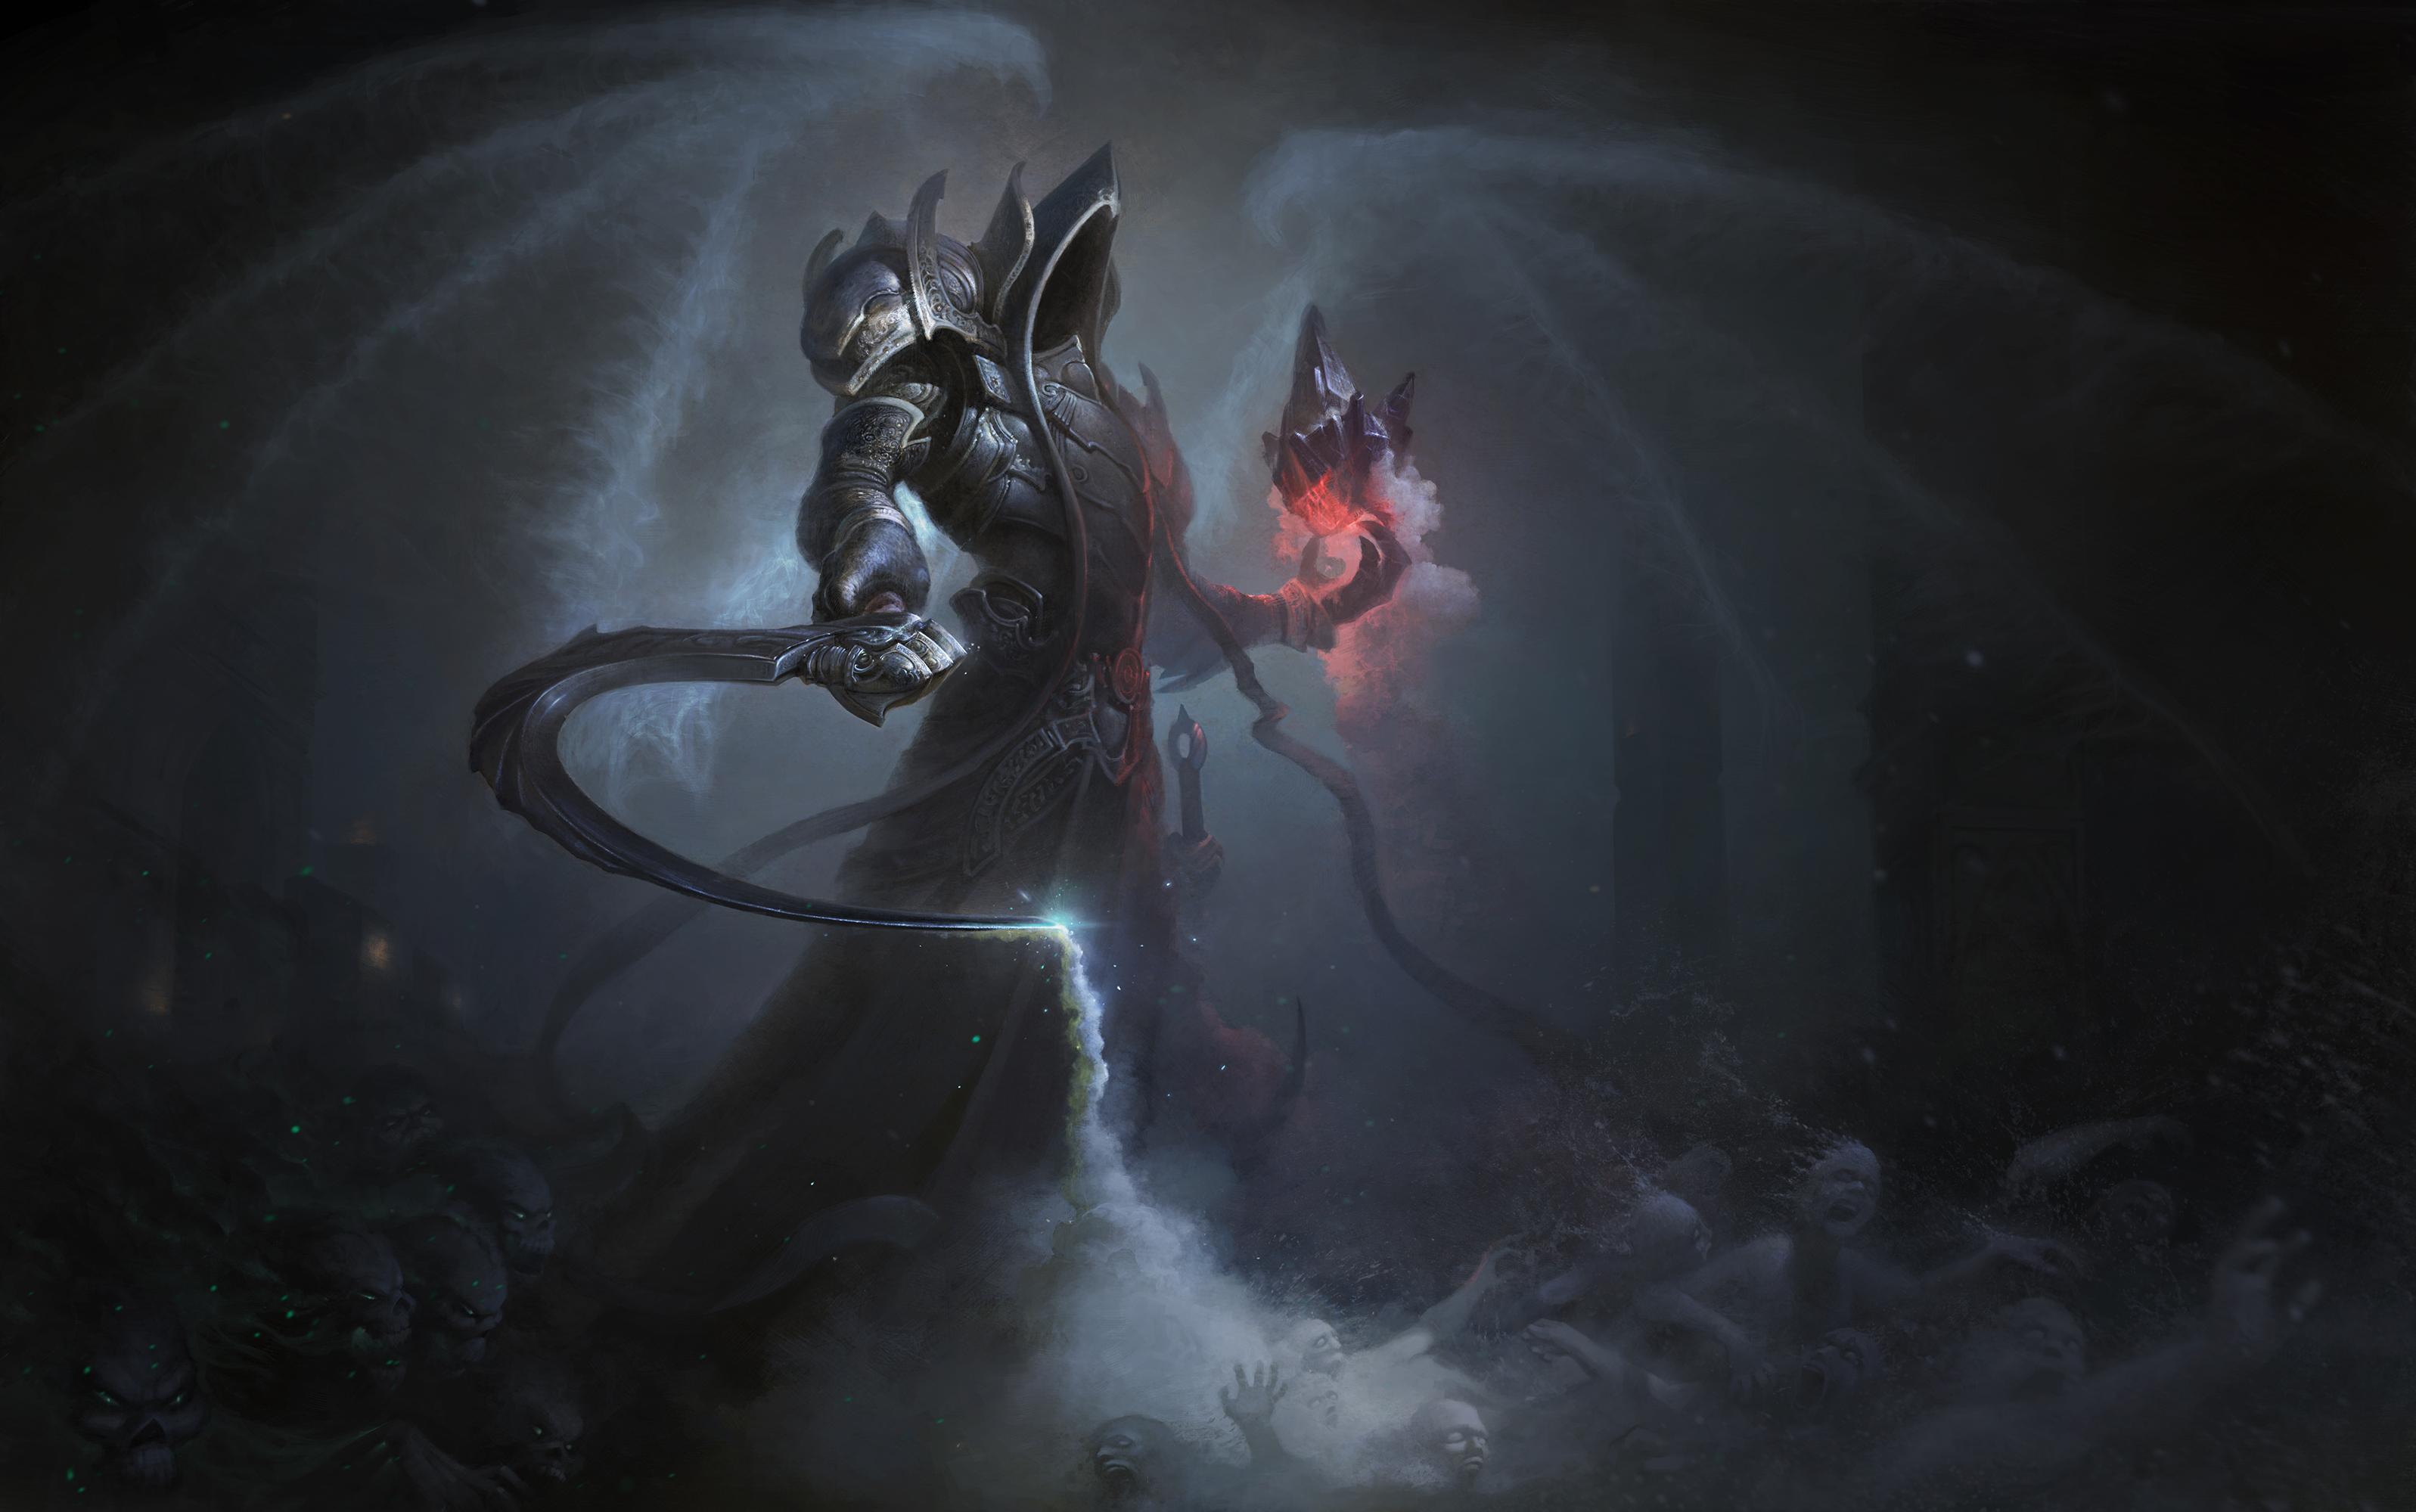  Diablo III Reaper Of Souls HD Wallpapers and Backgrounds